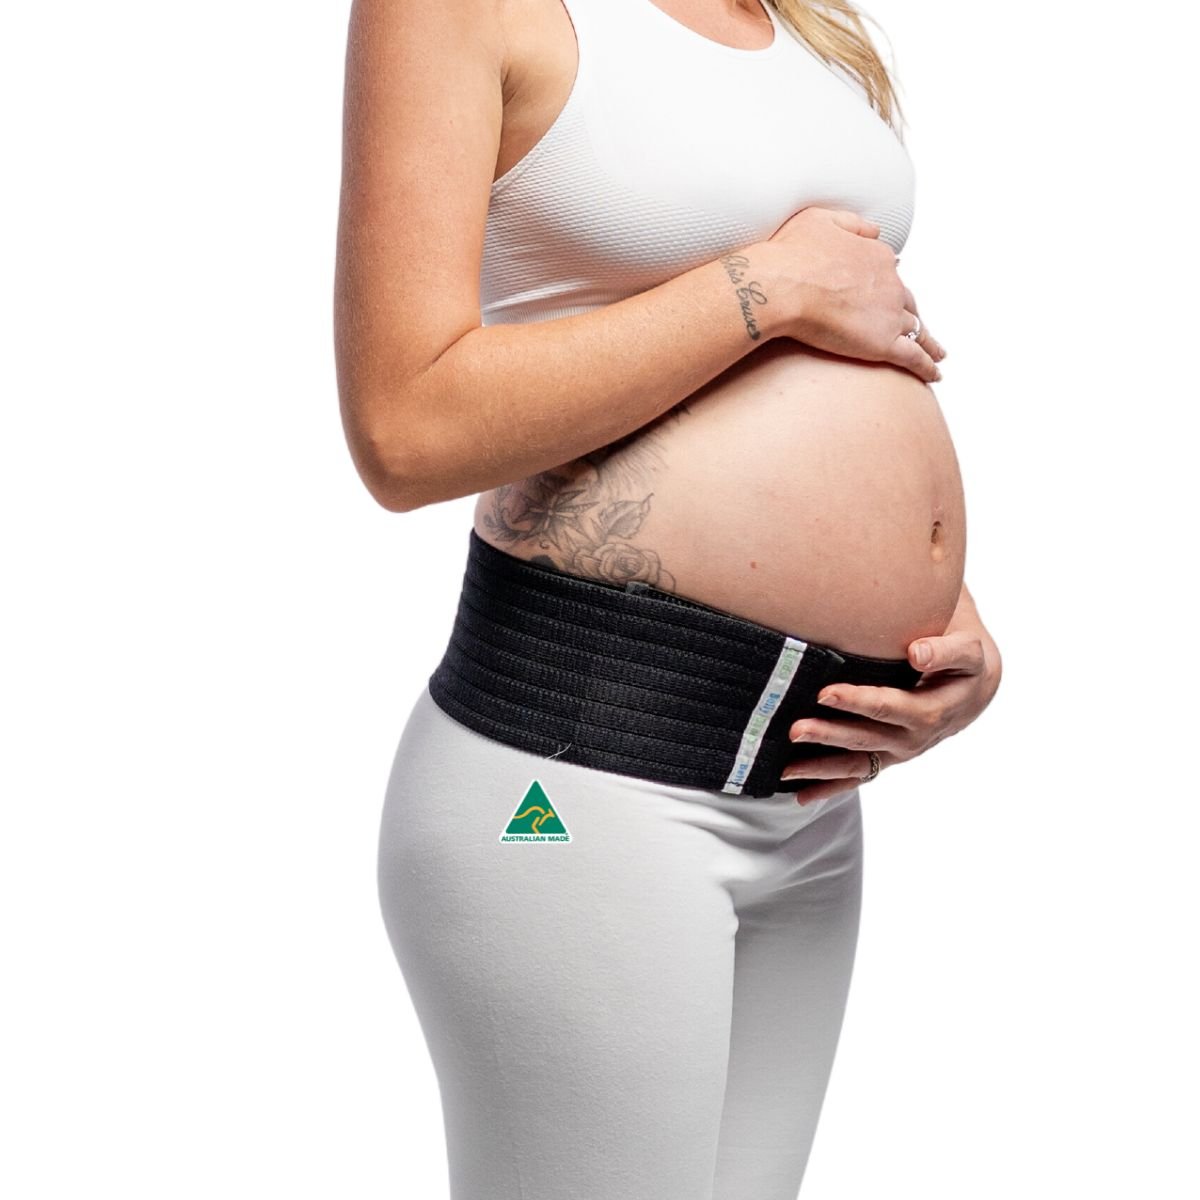 Strenbodi Pelvic Support Belt Pregnancy Belly Band for Treating